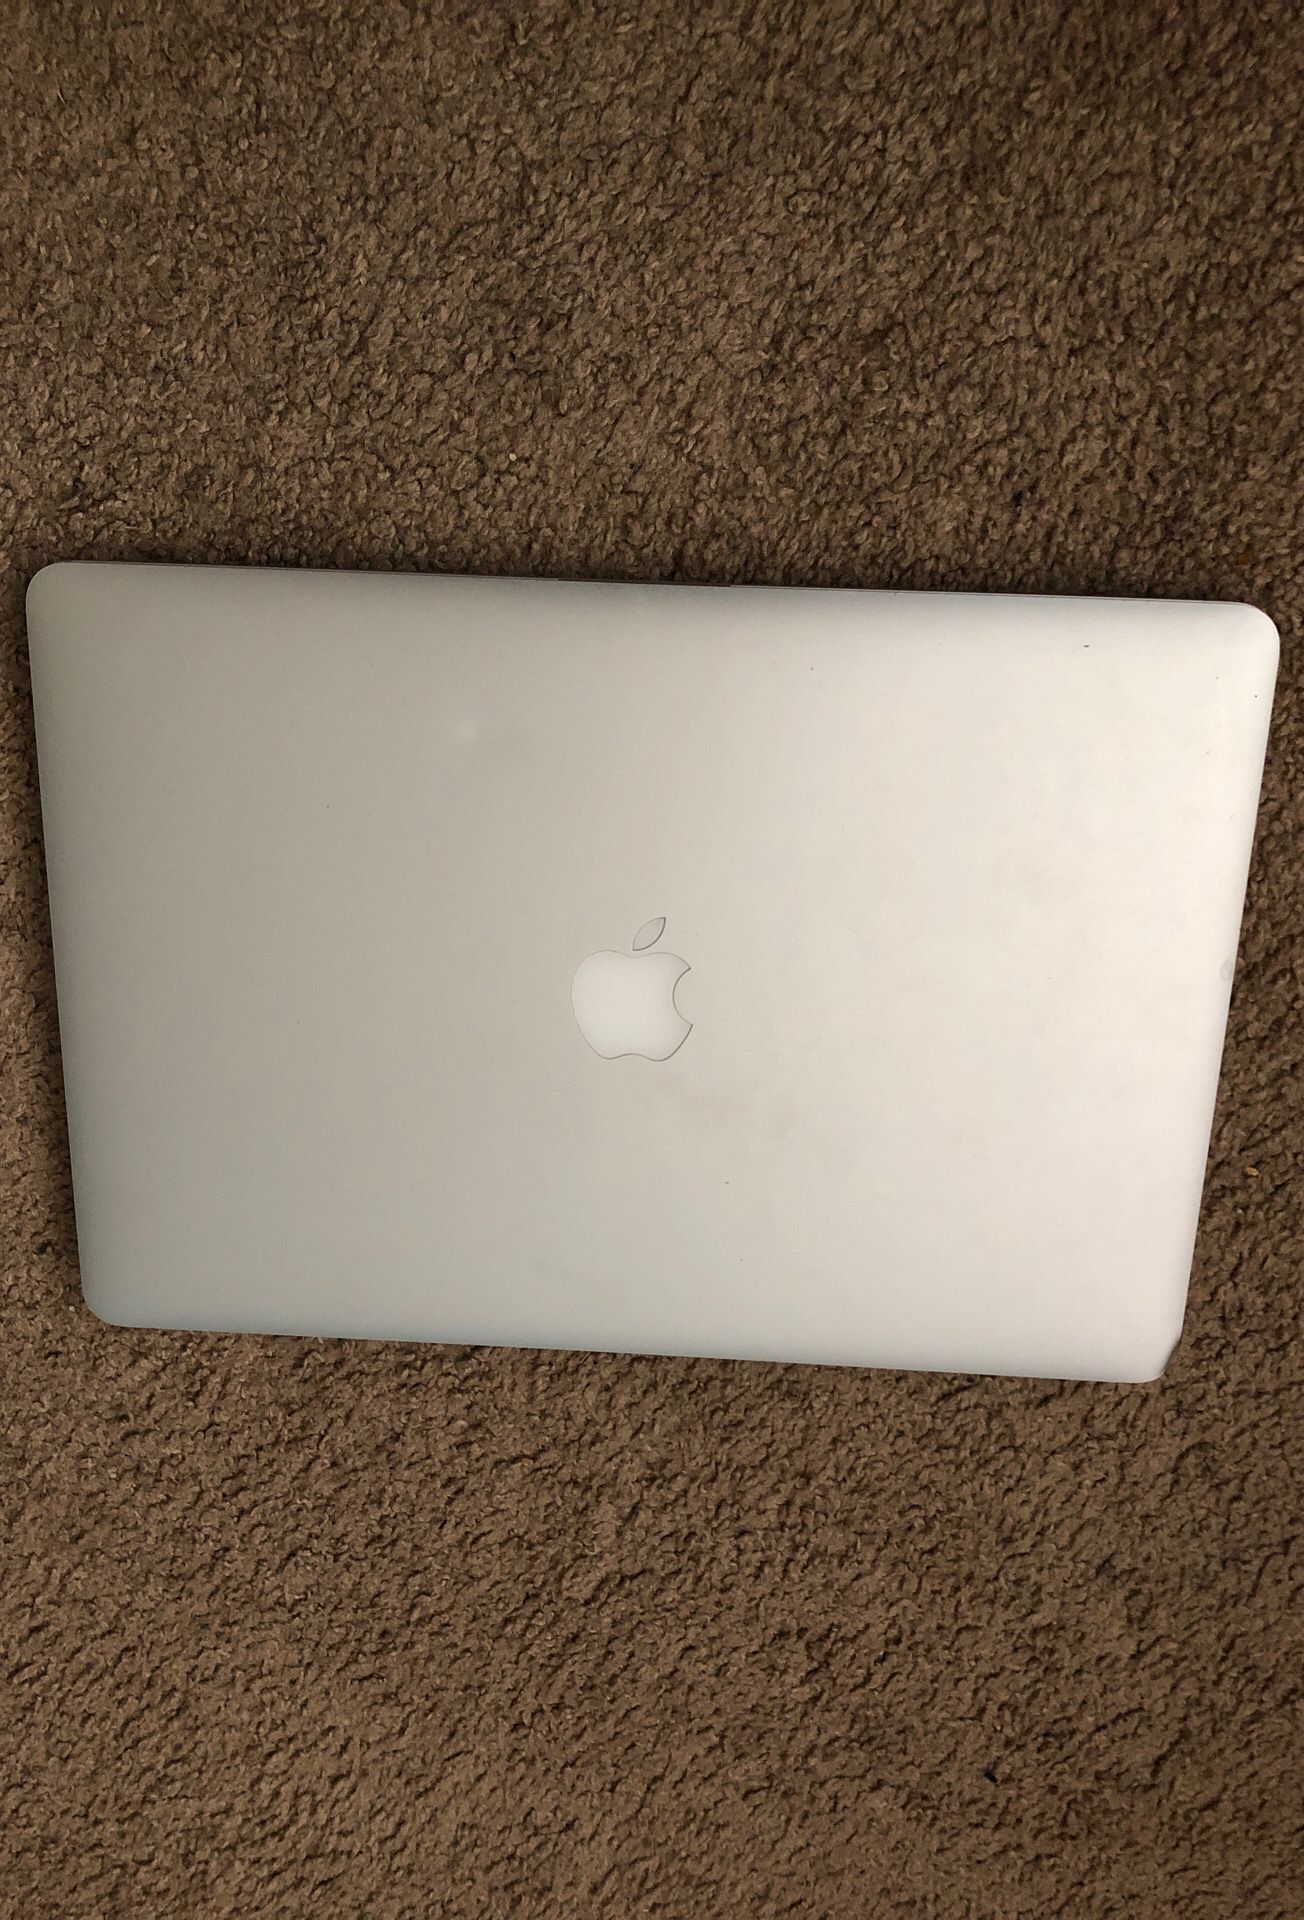 Mac Pro 15 inches